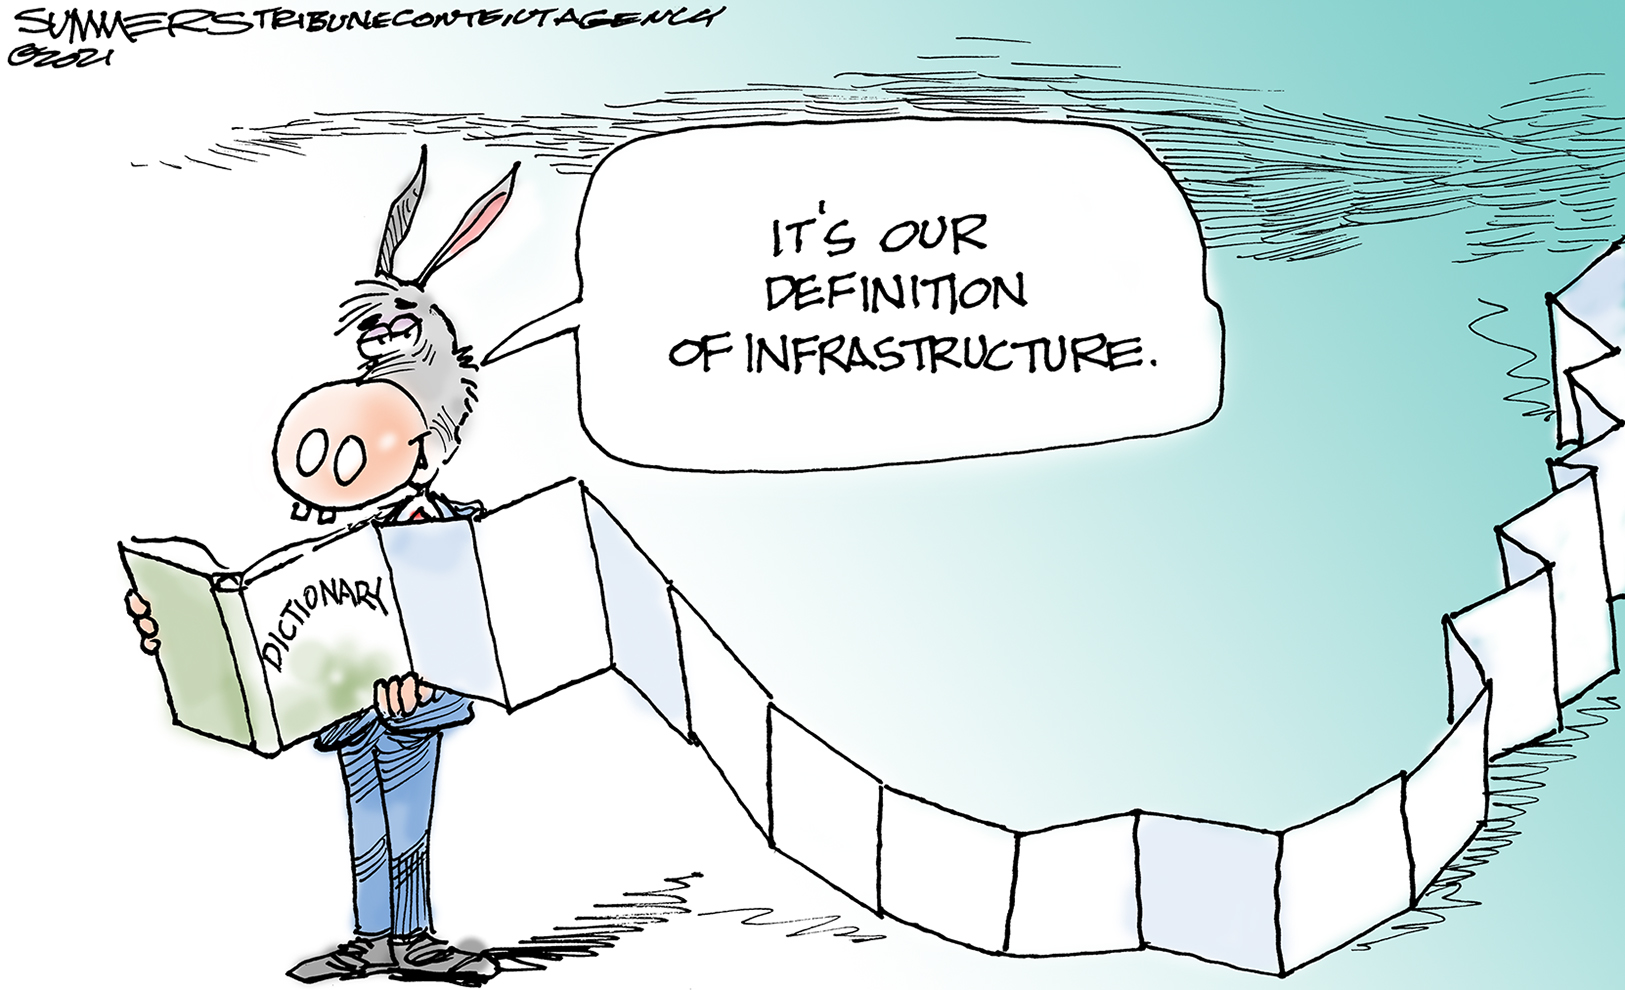 April 17: Infrastructure Bill